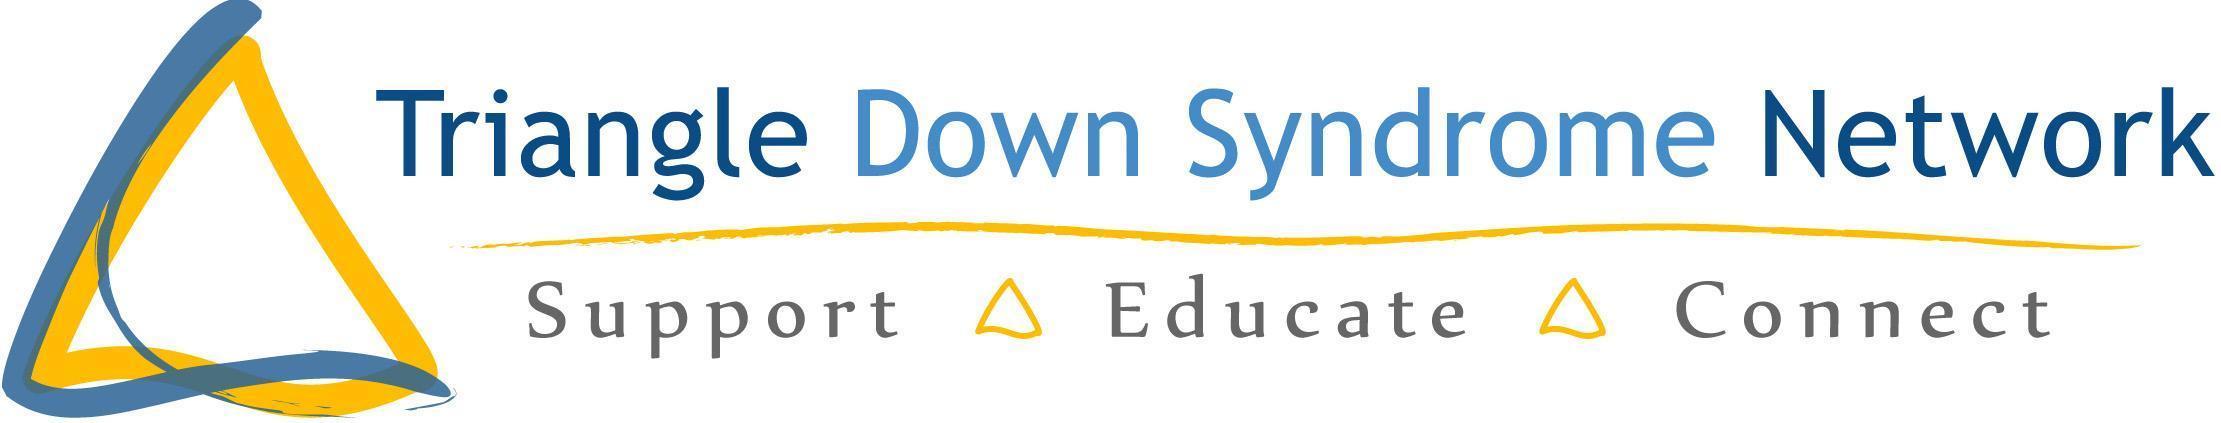 triangle down syndrome network owler 20160228 095735 original